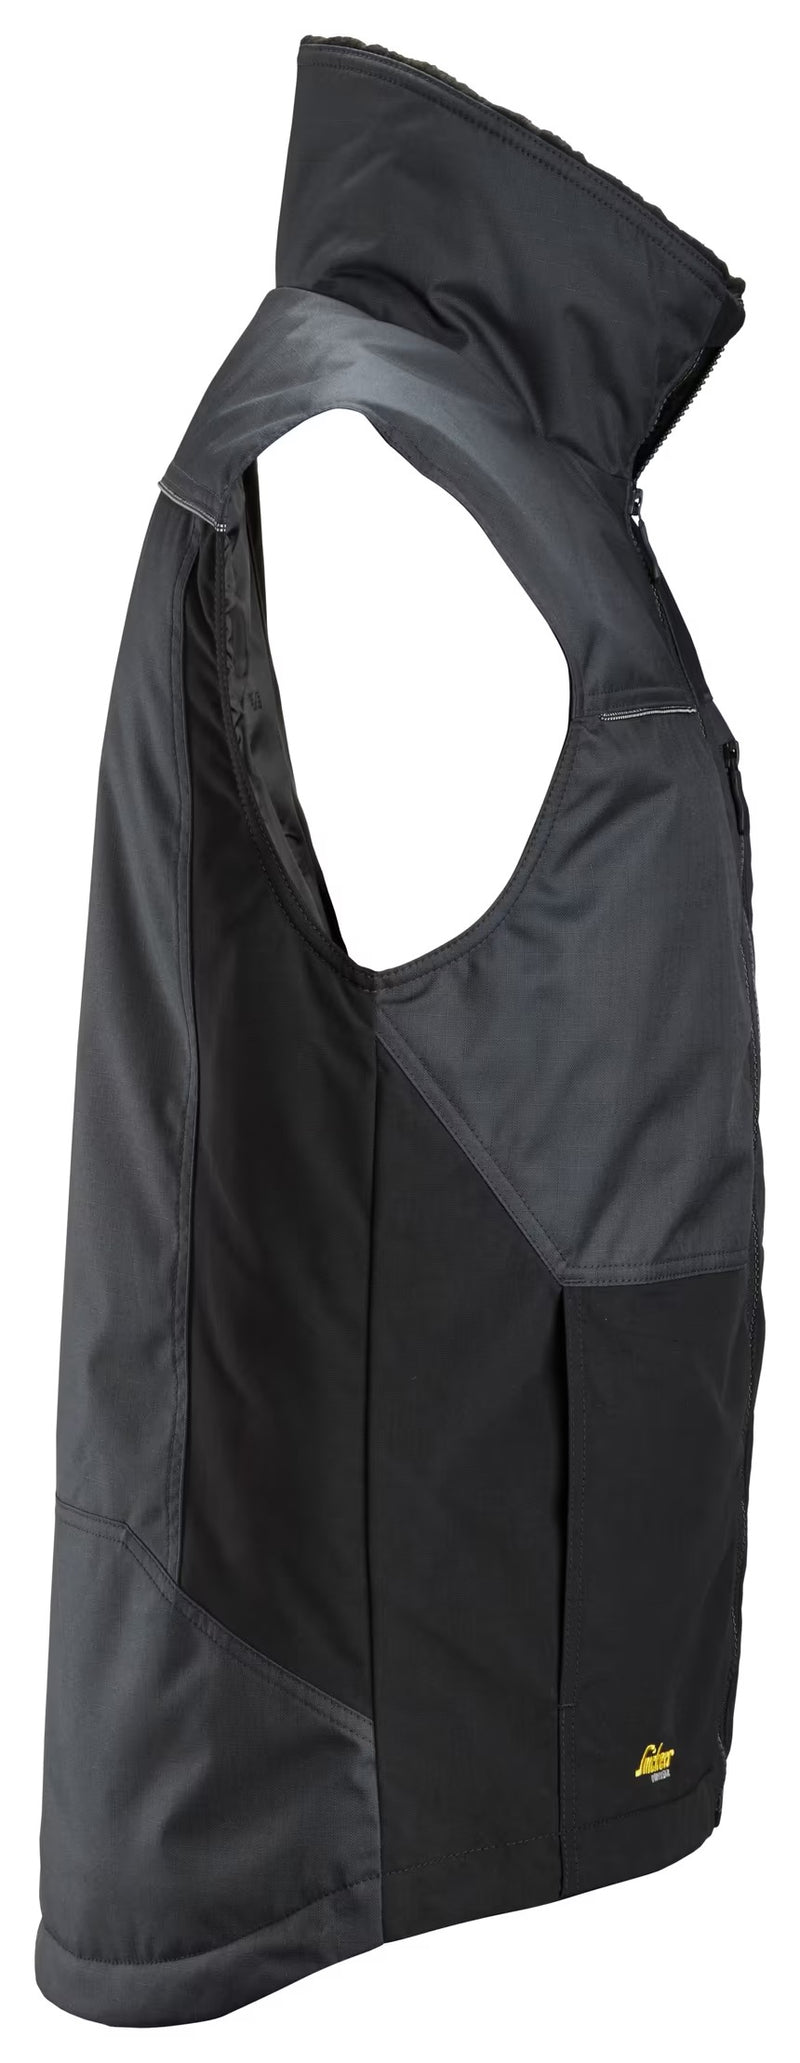 Snickers Workwear 4548 AllroundWork Winter Vest - Steel Grey/Black